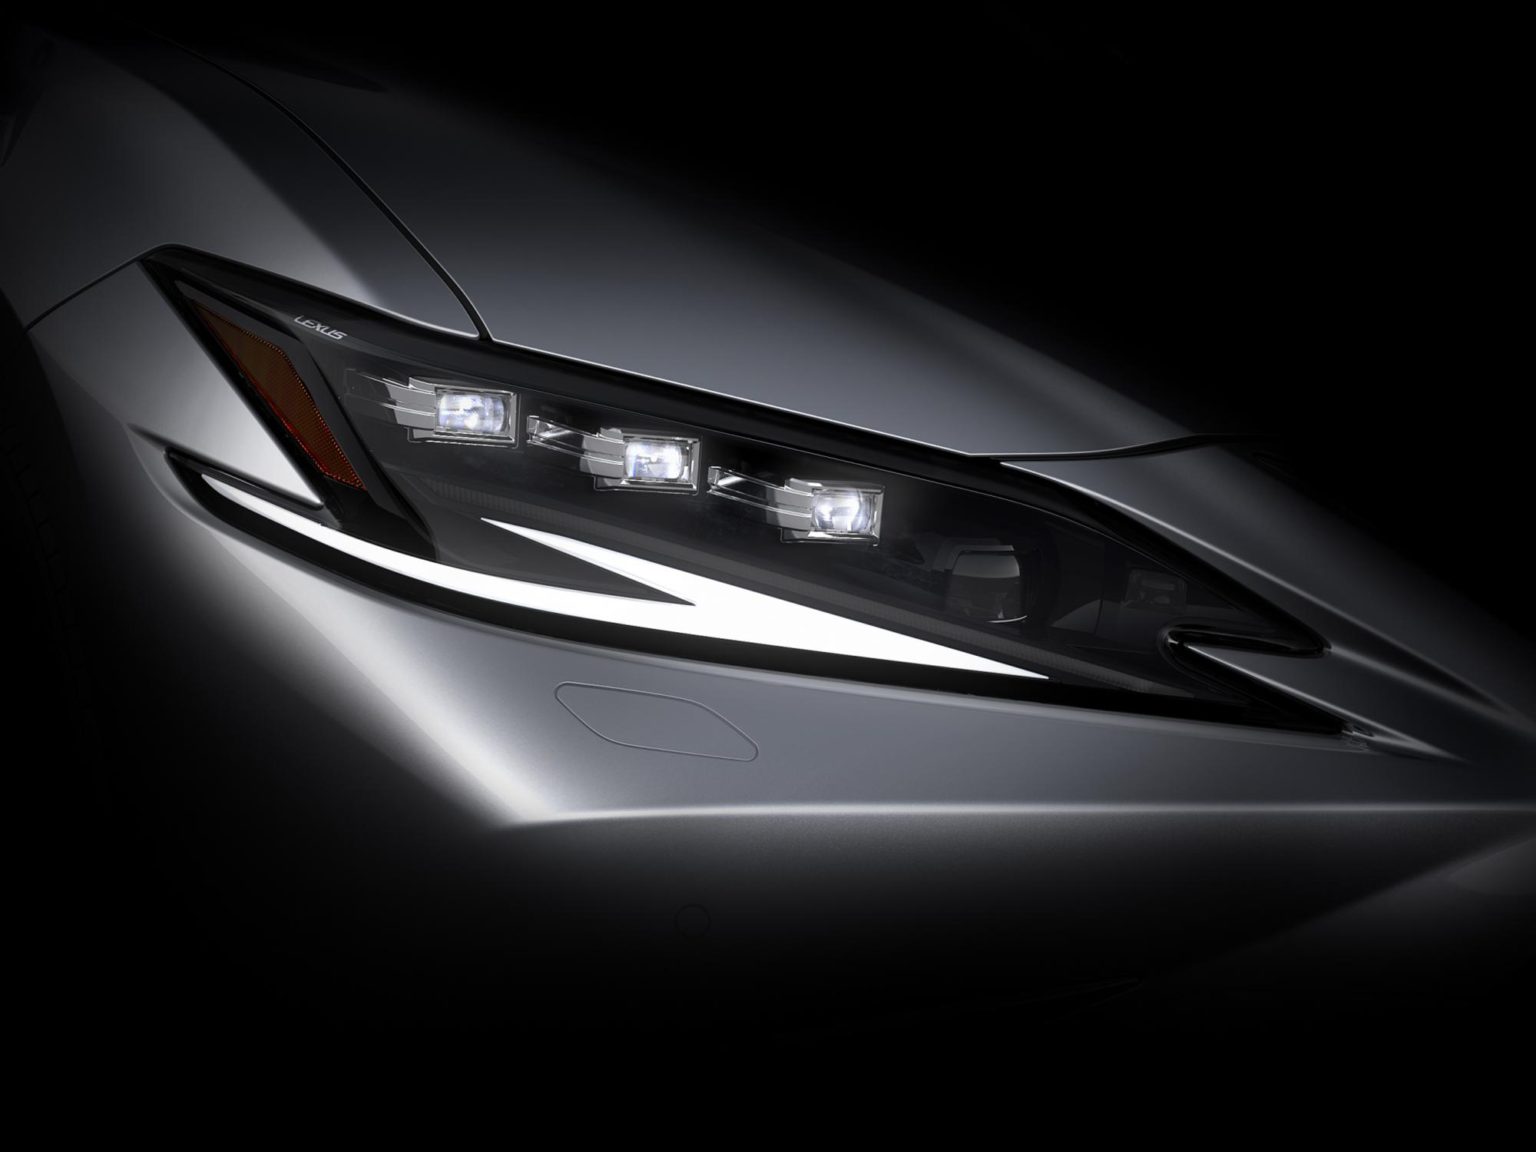 The 2022 Lexus ES will debut next week.